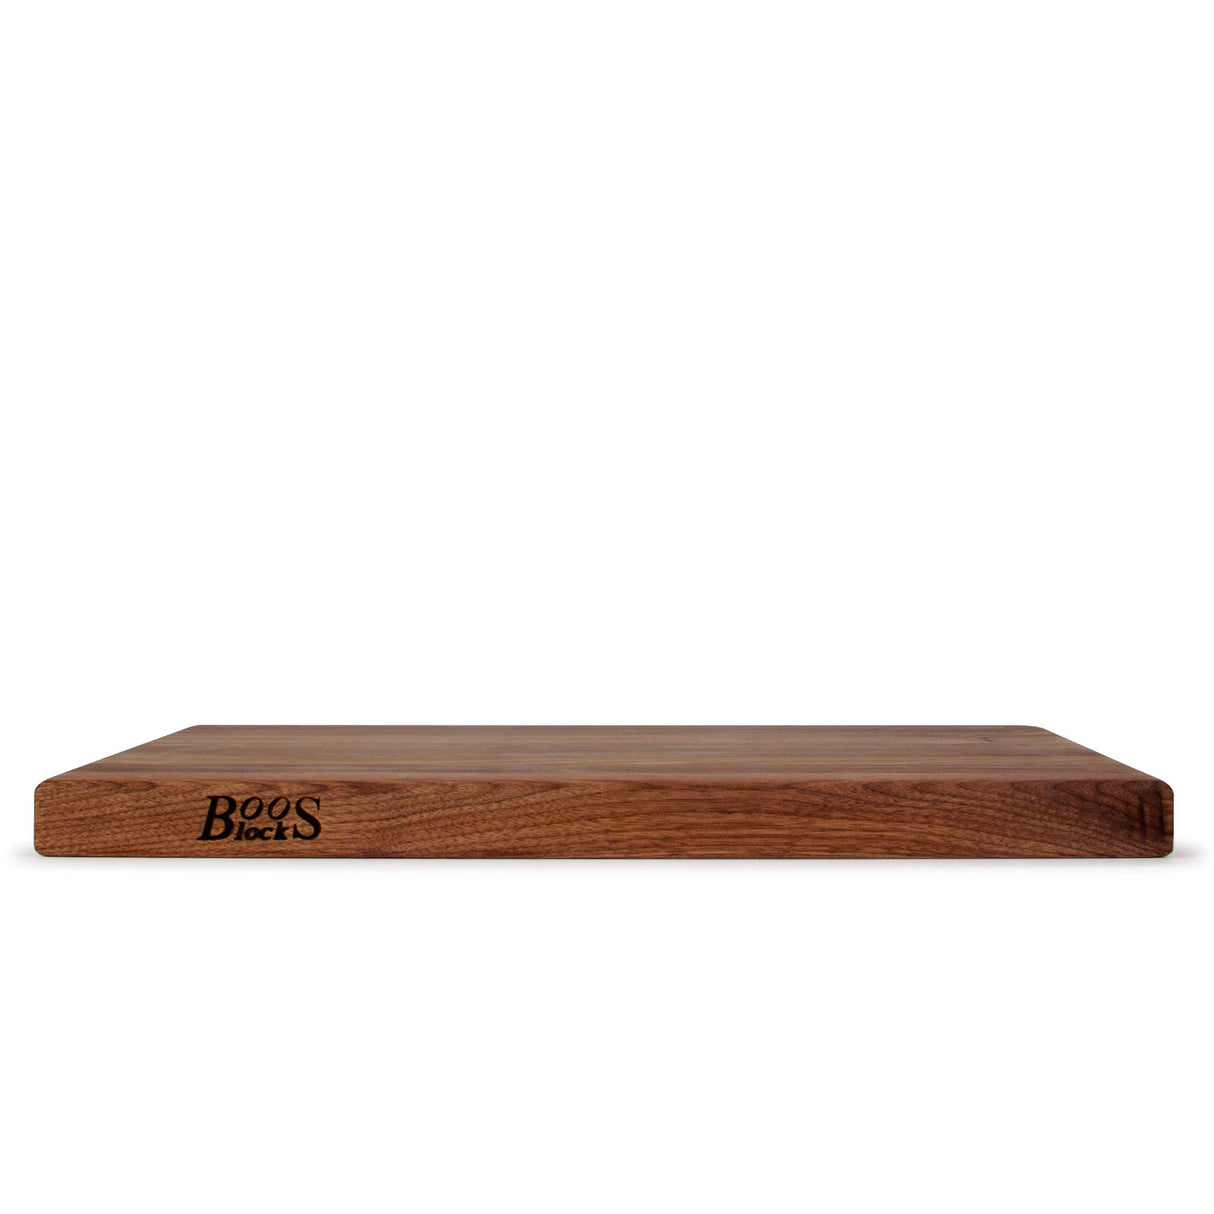 John Boos WAL-R02 Walnut Wood Cutting Board for Kitchen Prep, 1.5 Inch Thick, Large Edge Grain Rectangular Reversible Charcuterie Block, 24" x 18" 1.5" 24X18X1.5 WAL-EDGE GR-REV-